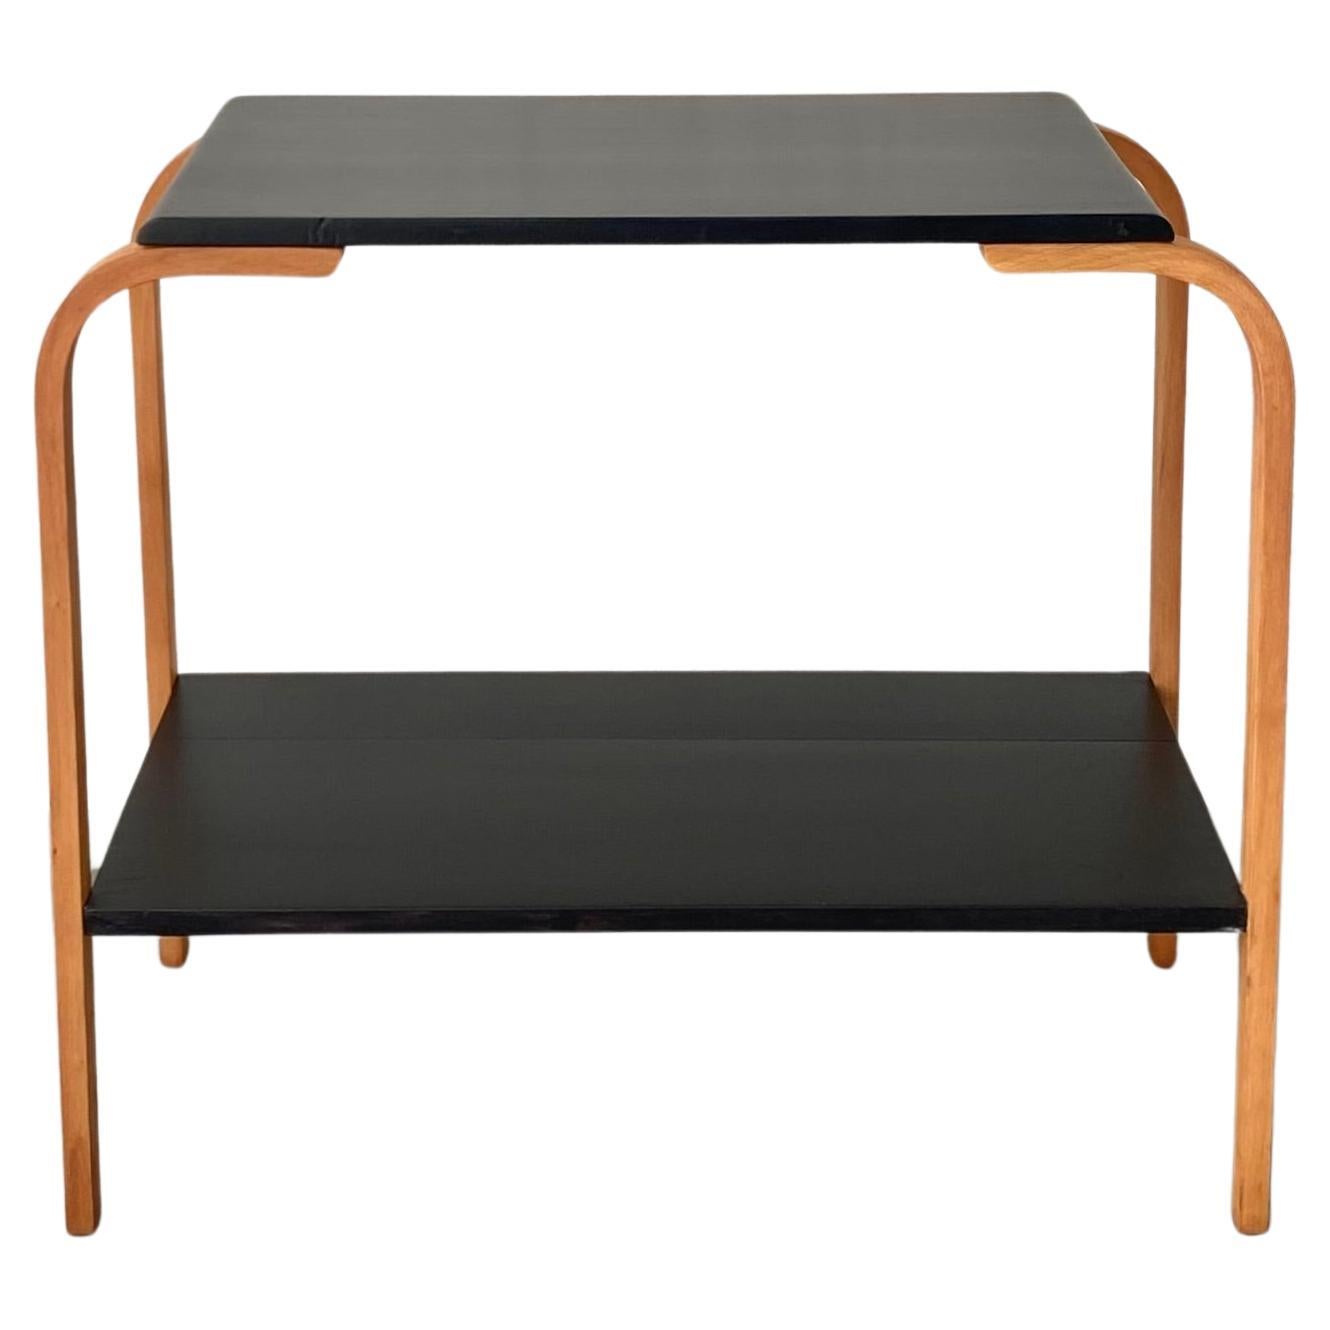 Bentwood modernist side table by Gemla Fabriker, Sweden, 1930s For Sale